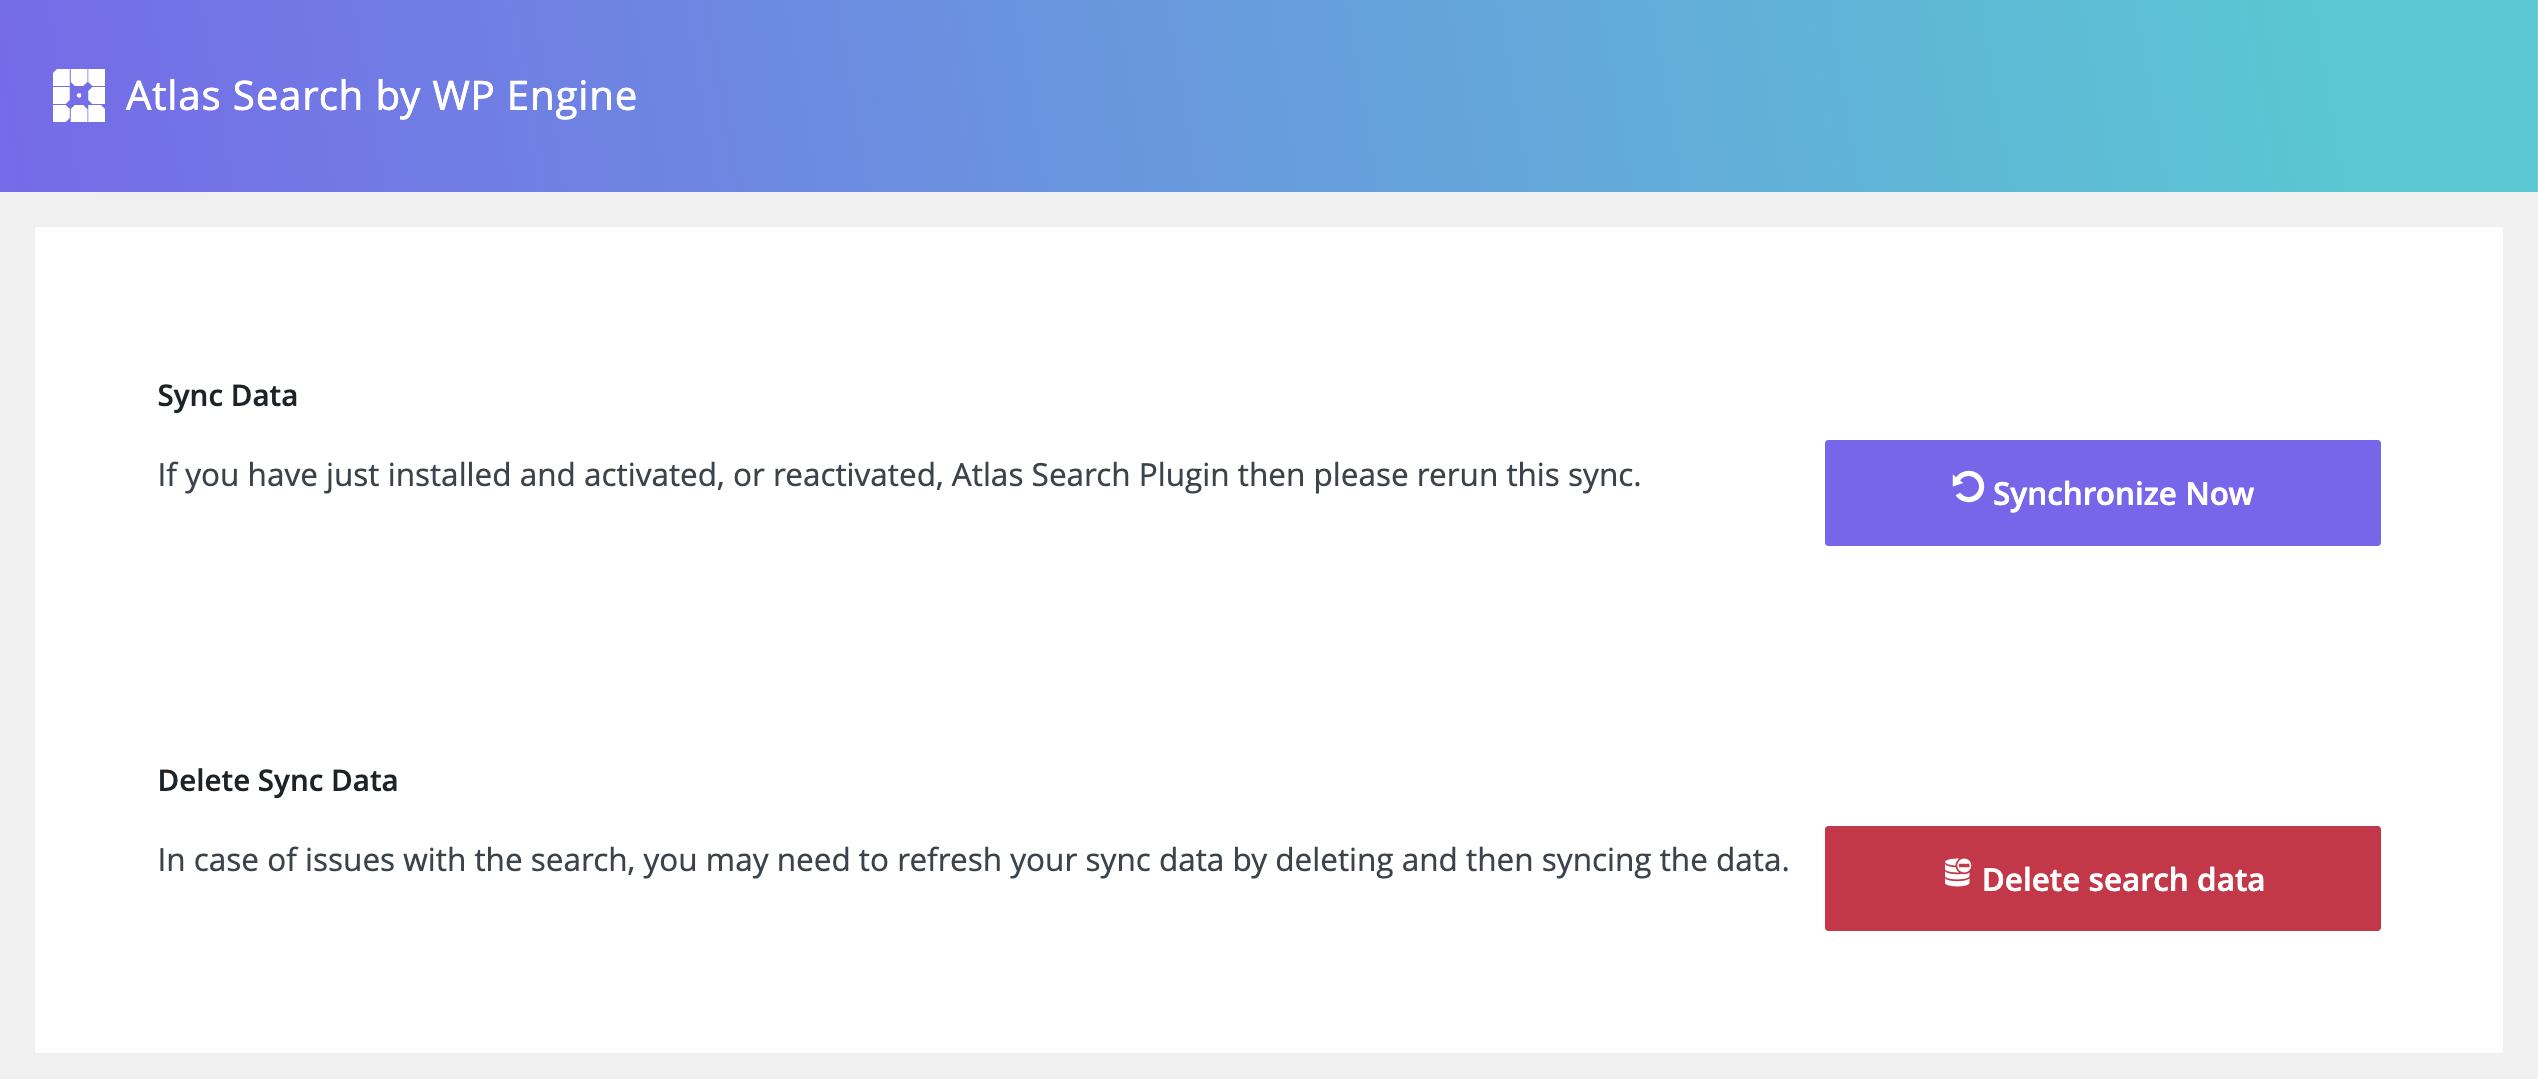 Atlas Search Plugin Data Sync